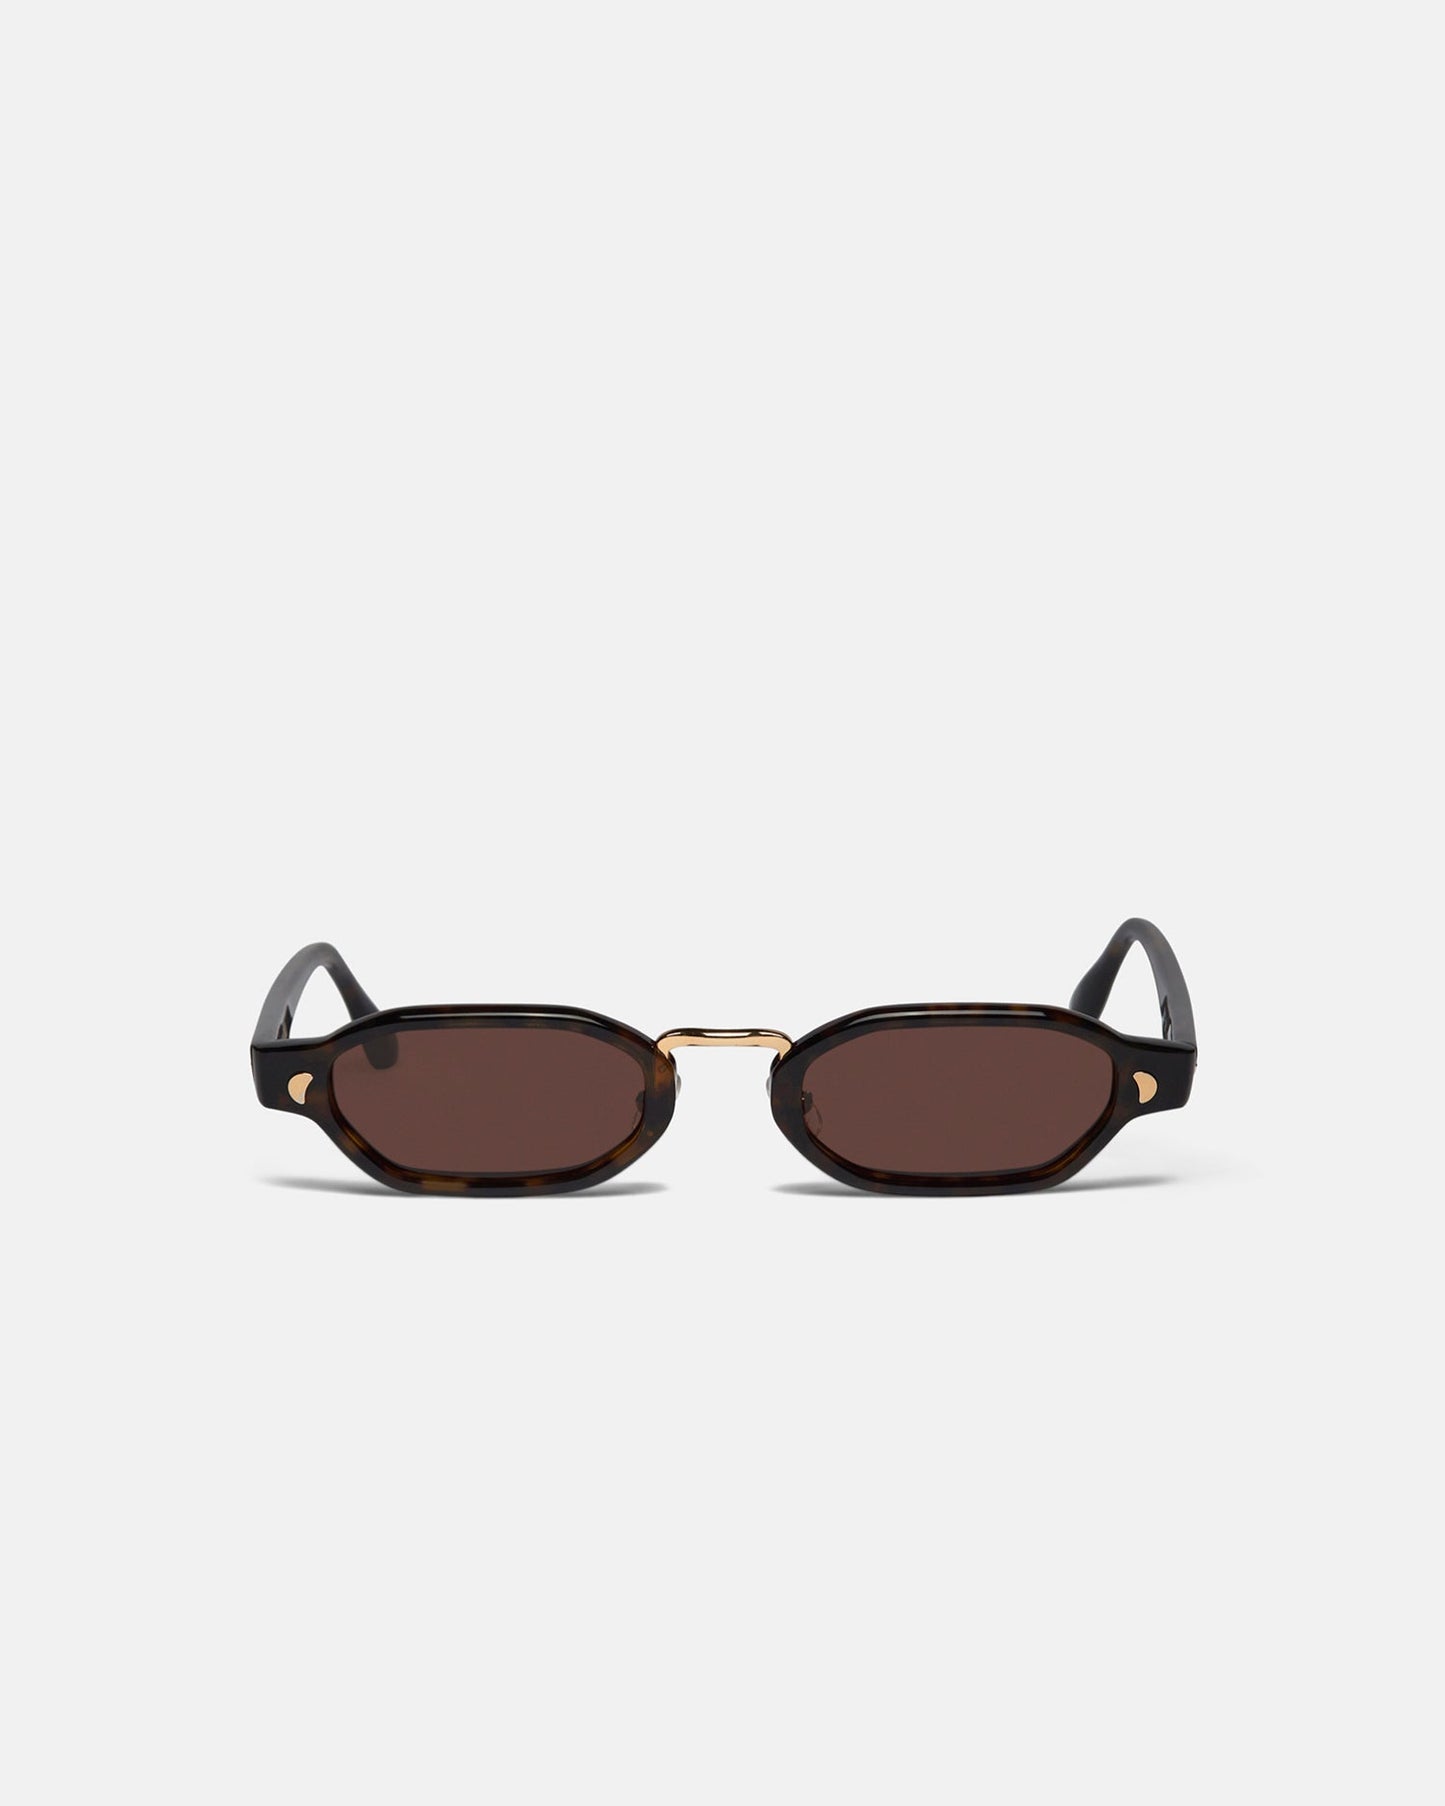 Weco - Oval-Frame Sunglasses - BrownTurtle